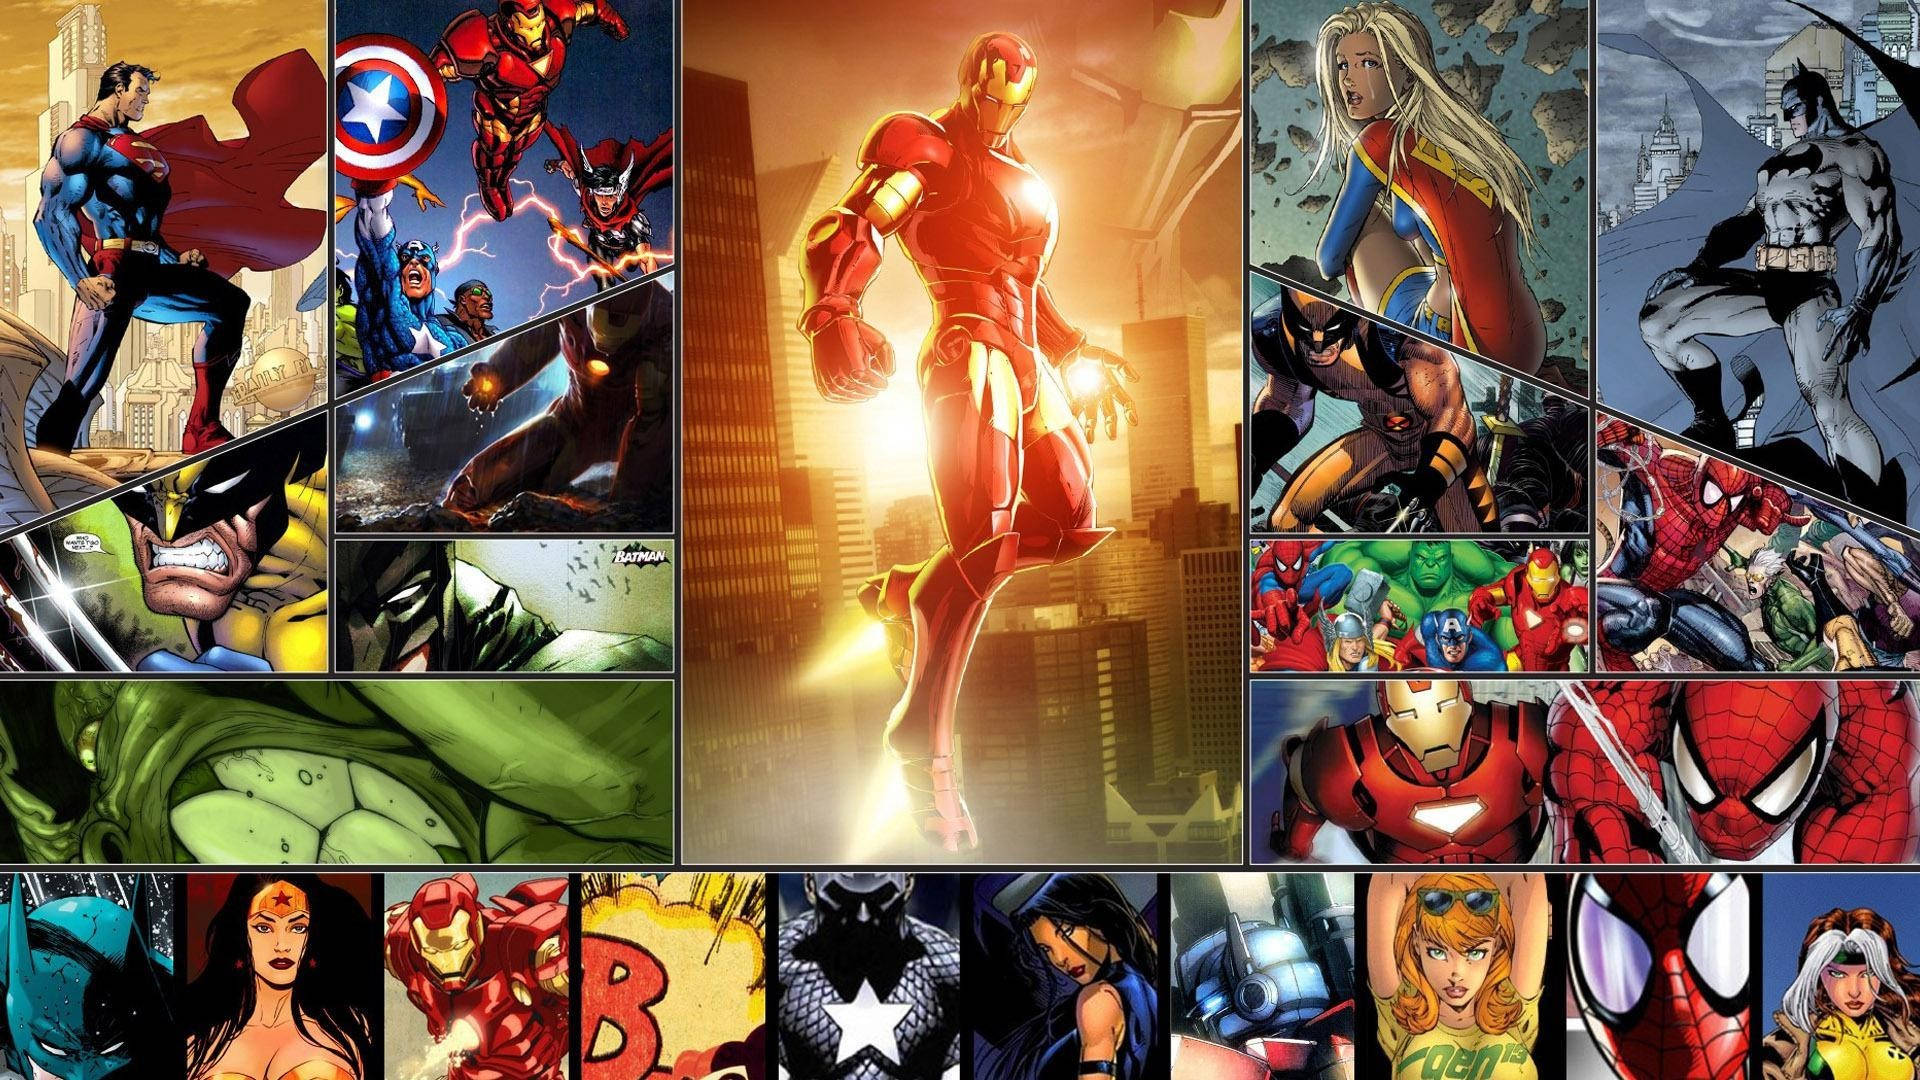 Free Hd Superhero Wallpaper Downloads, [100+] Hd Superhero Wallpapers for  FREE 